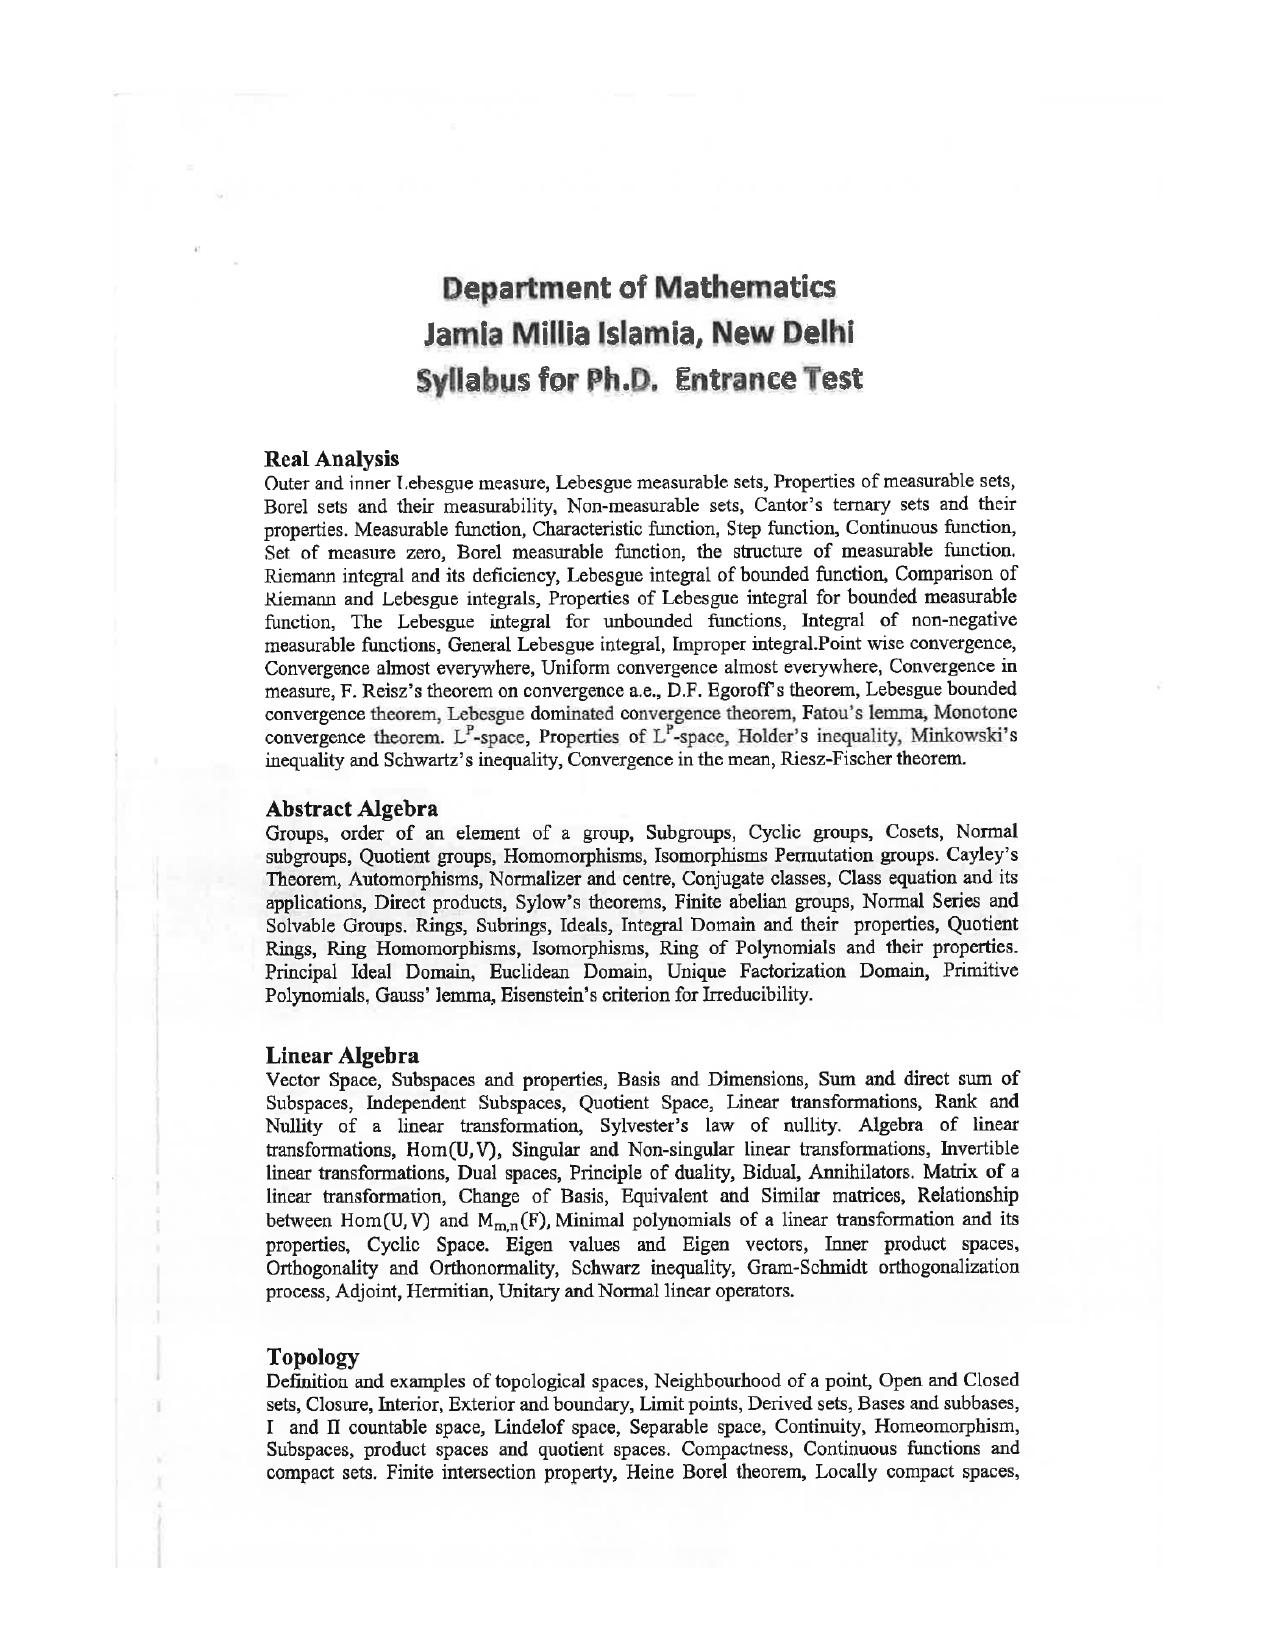 JMI Entrance Exam FACULTY OF NATURAL SCIENCES Syllabus - Page 36